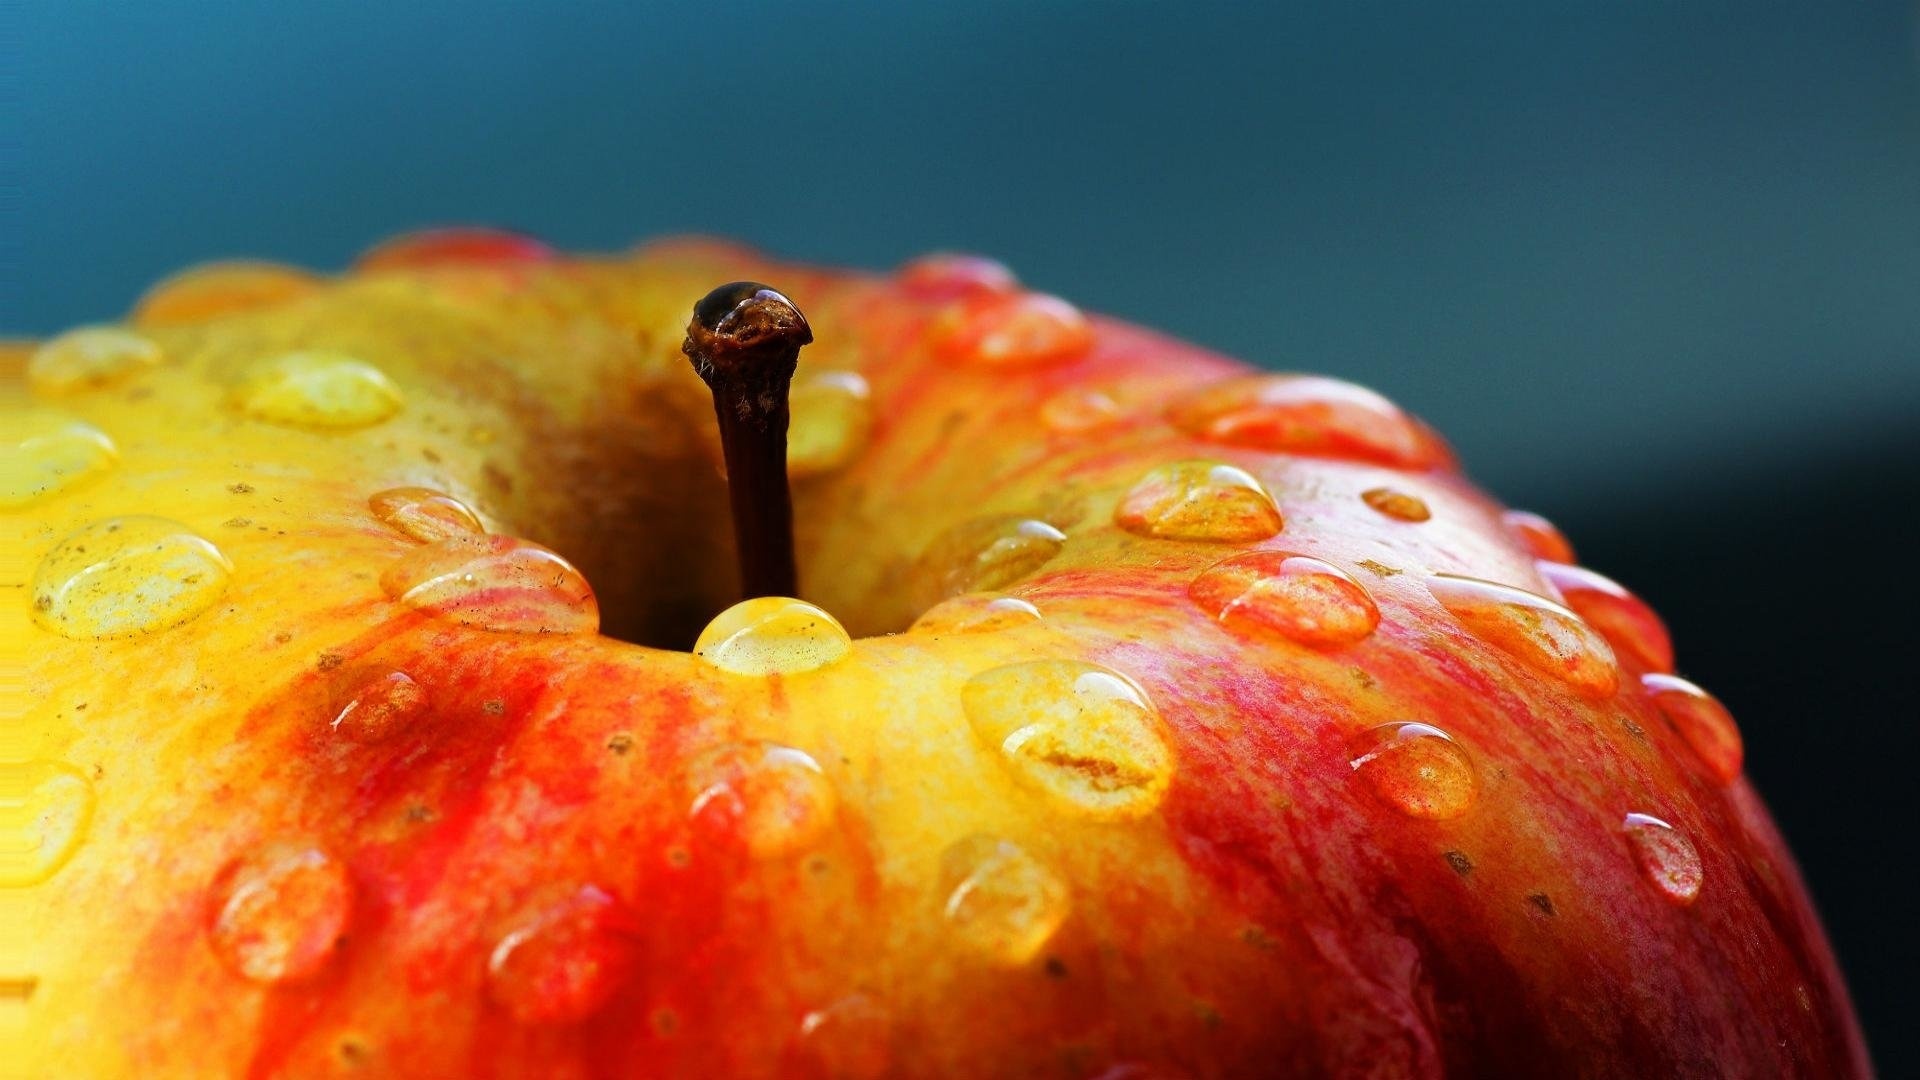 Apple Fruit Background